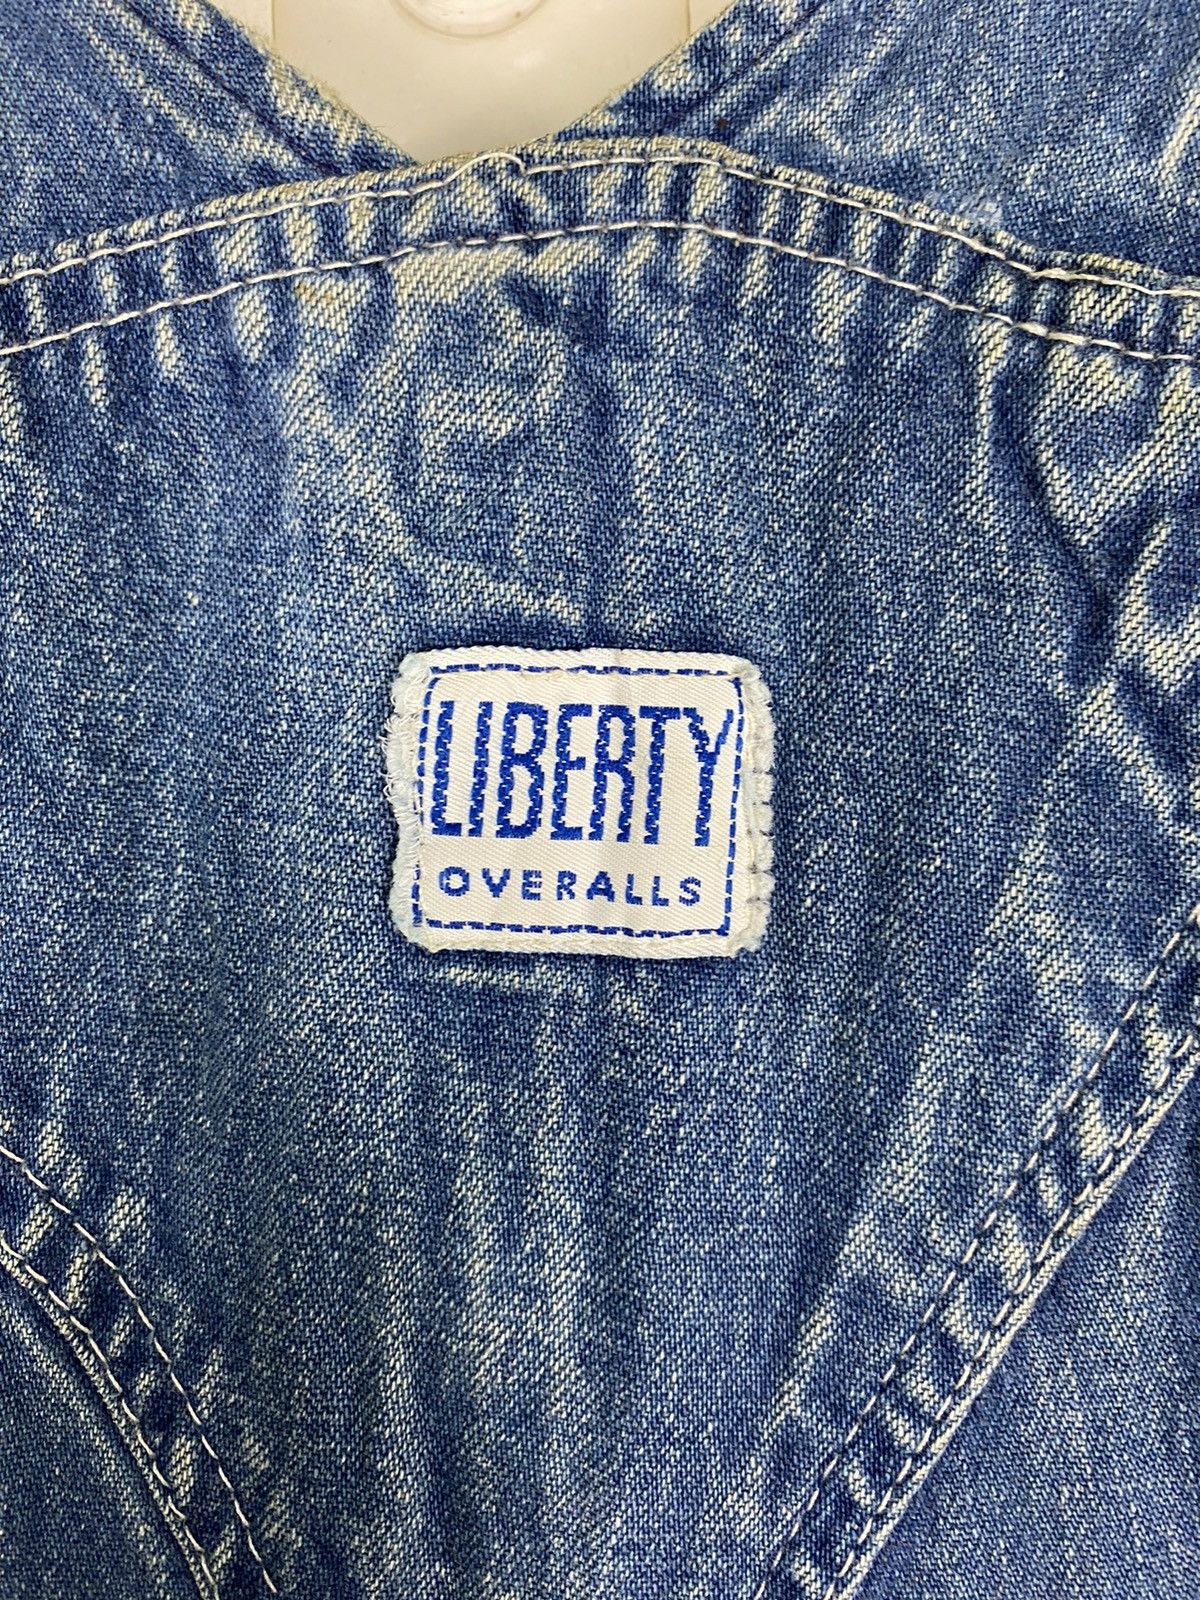 Vintage Liberty Overall Denim - 16